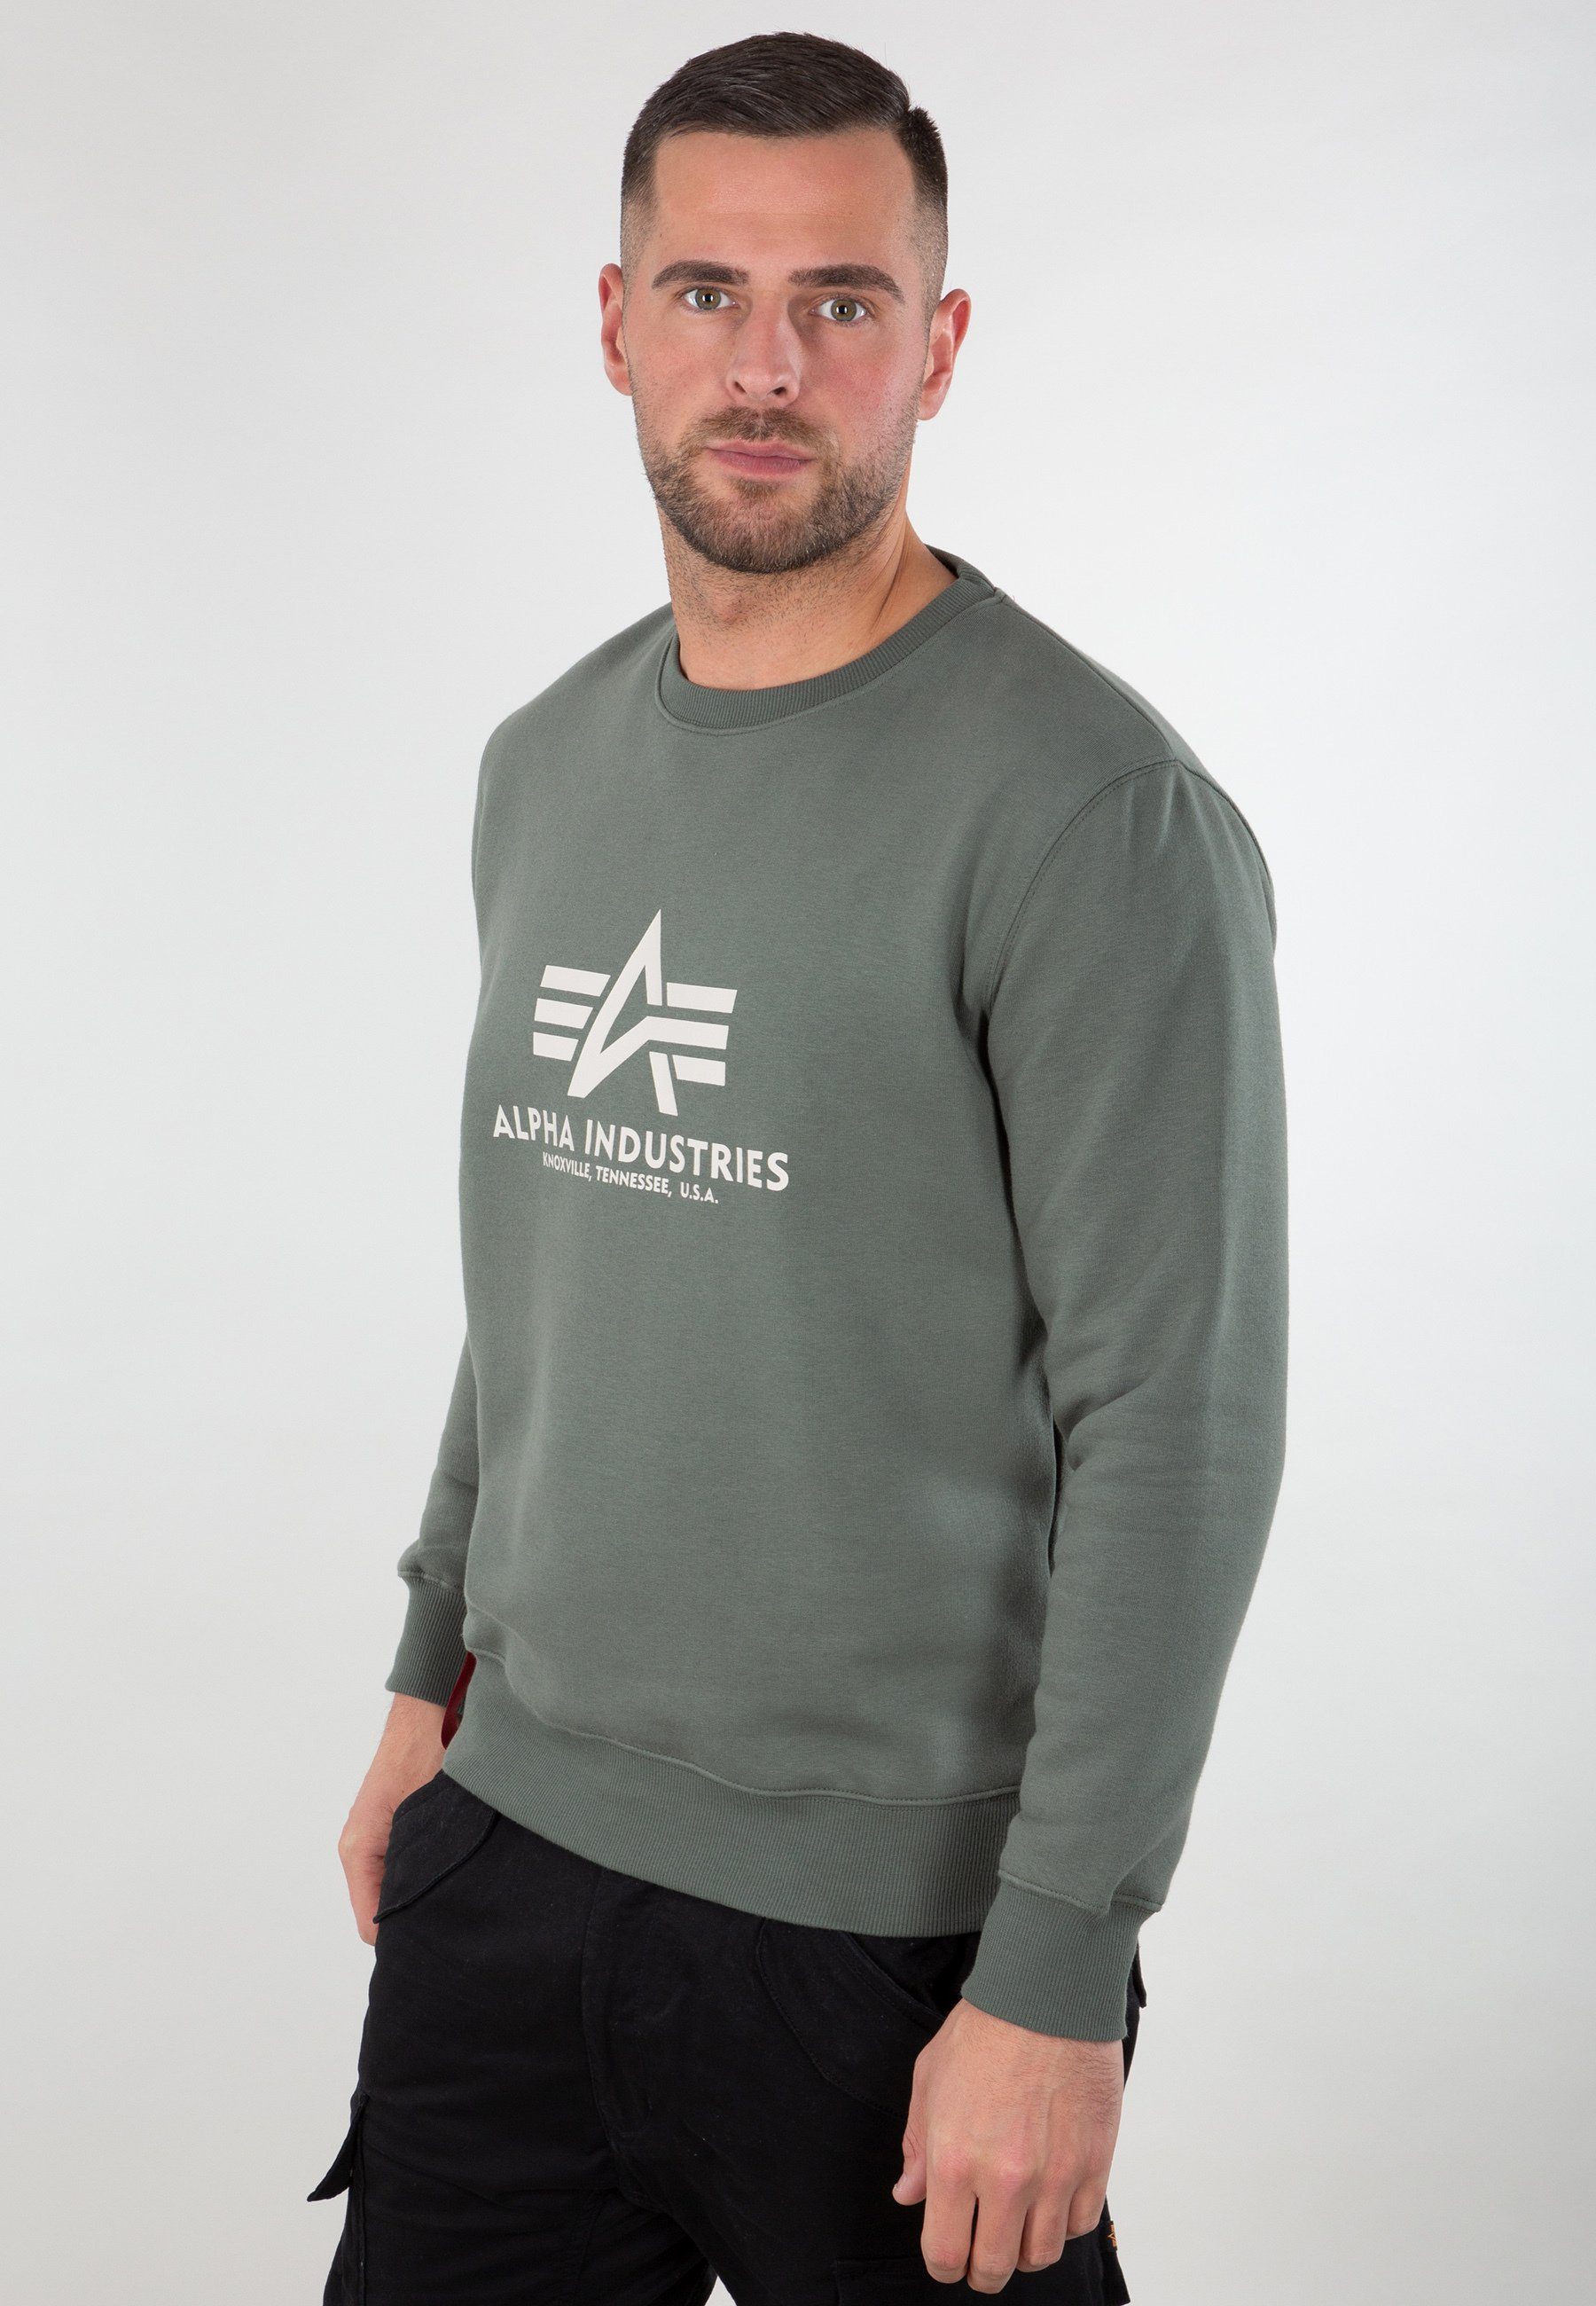 green Sweatshirts Sweater Men Industries - Sweater Basic Alpha vintage Alpha Industries